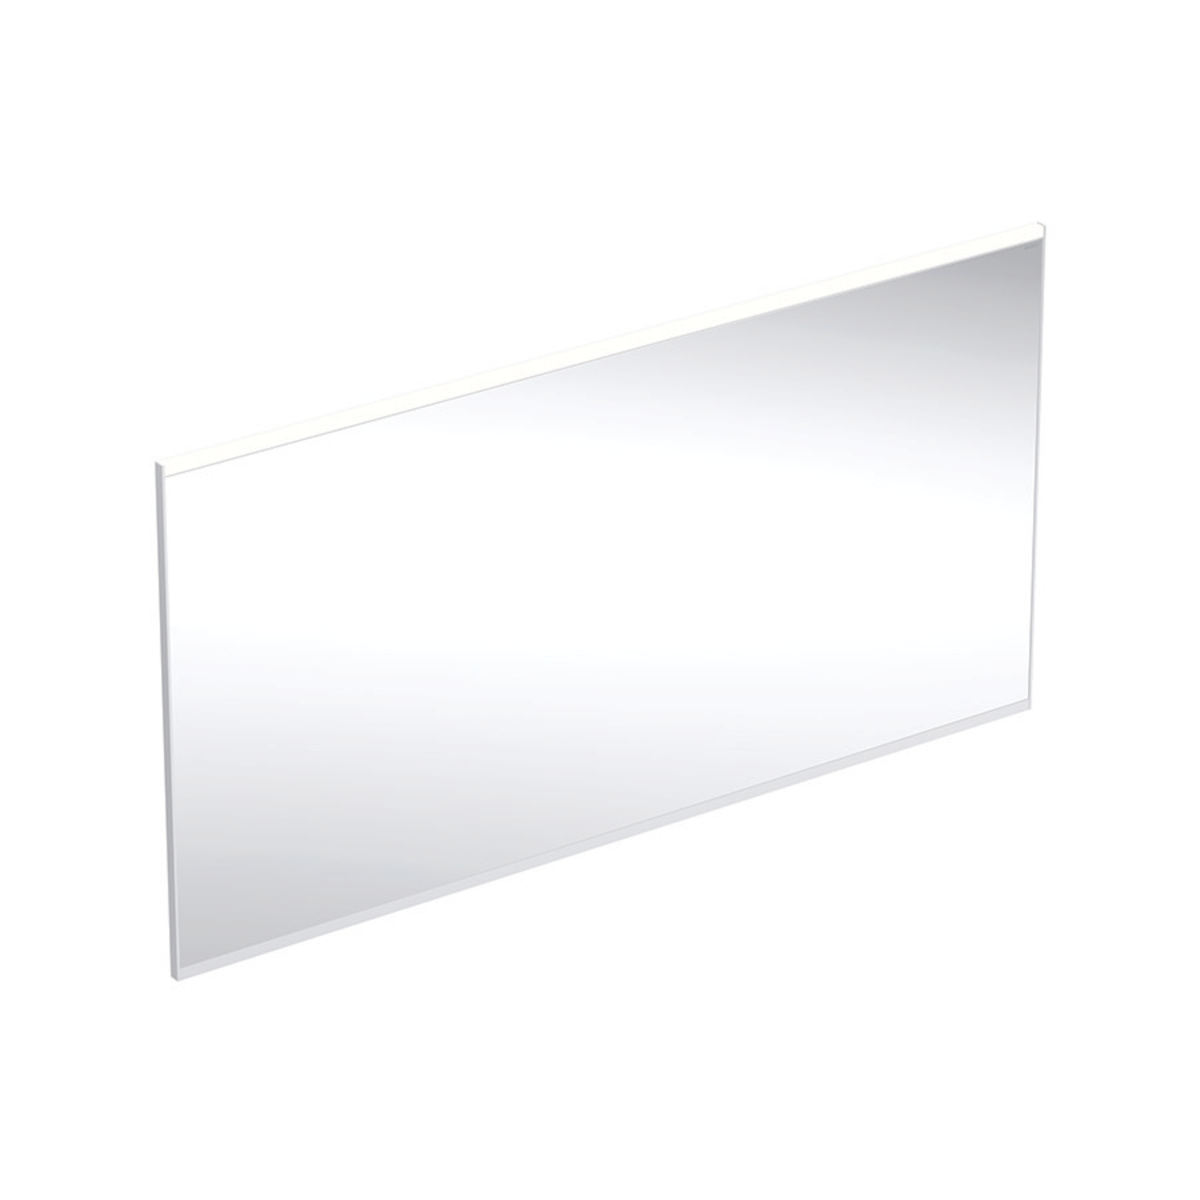 Option Plus Square illuminated mirror with lighting - 1350mm